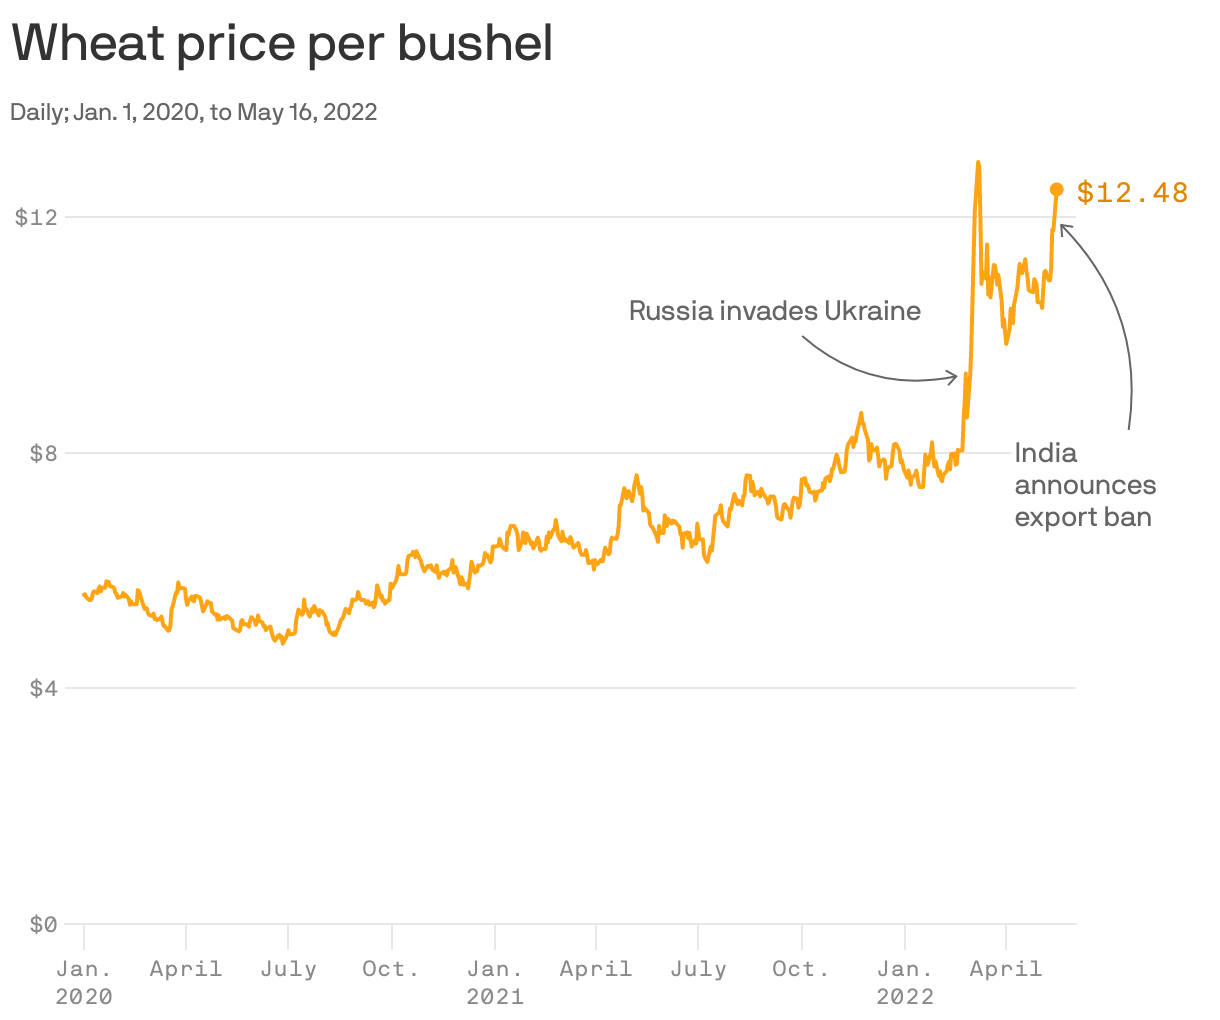 Wheat price per bushel